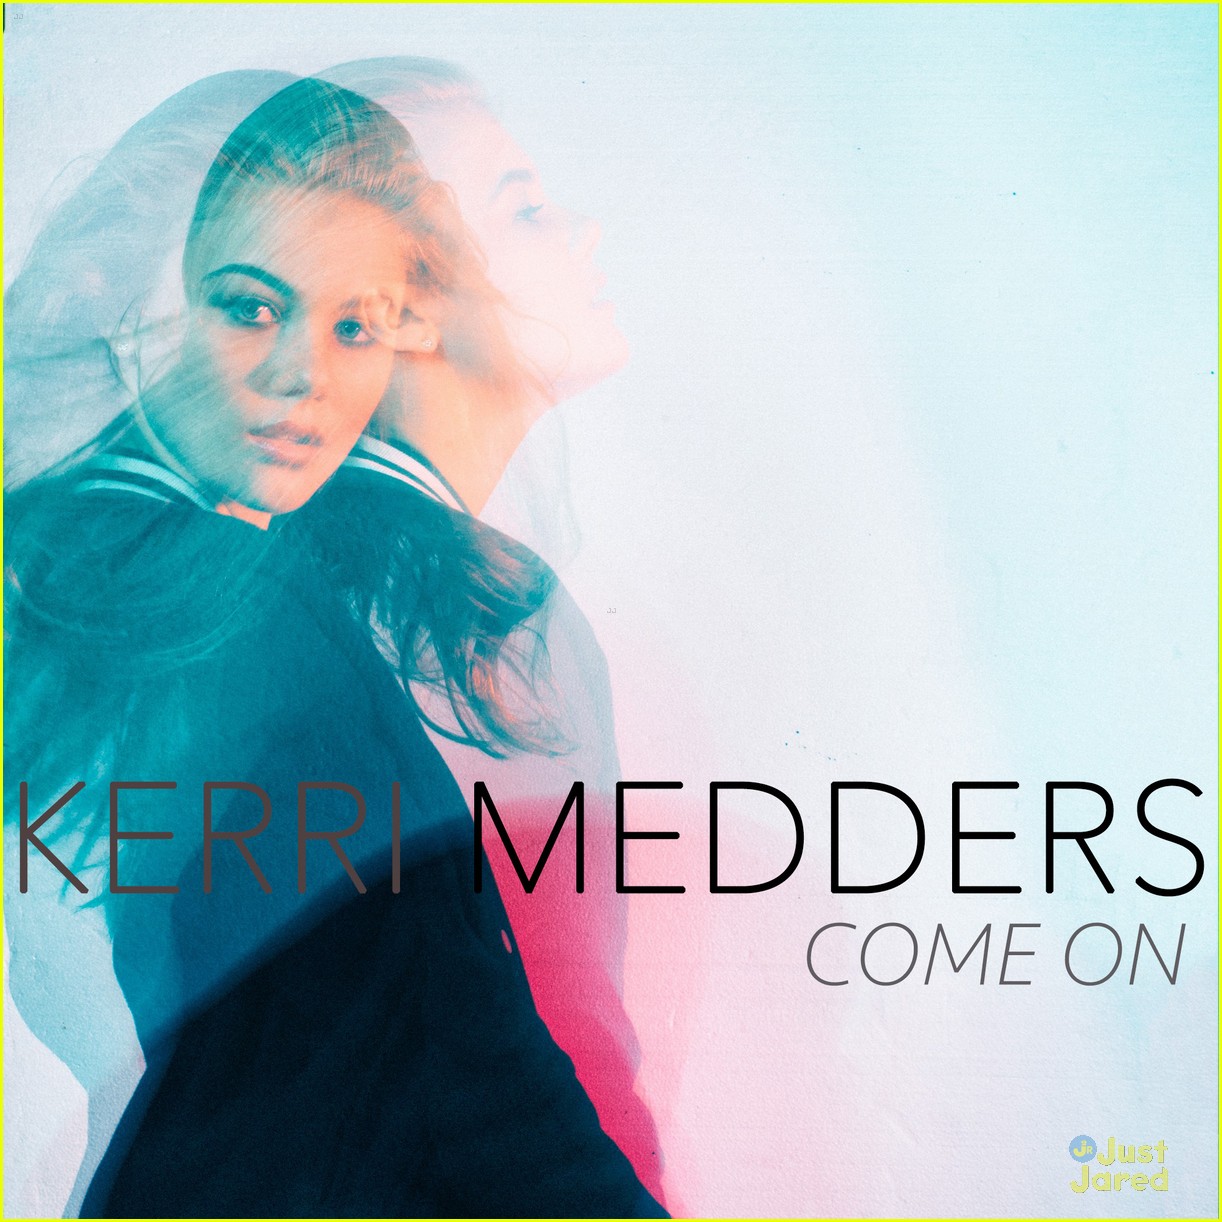 kerri medders come on music video premiere 01